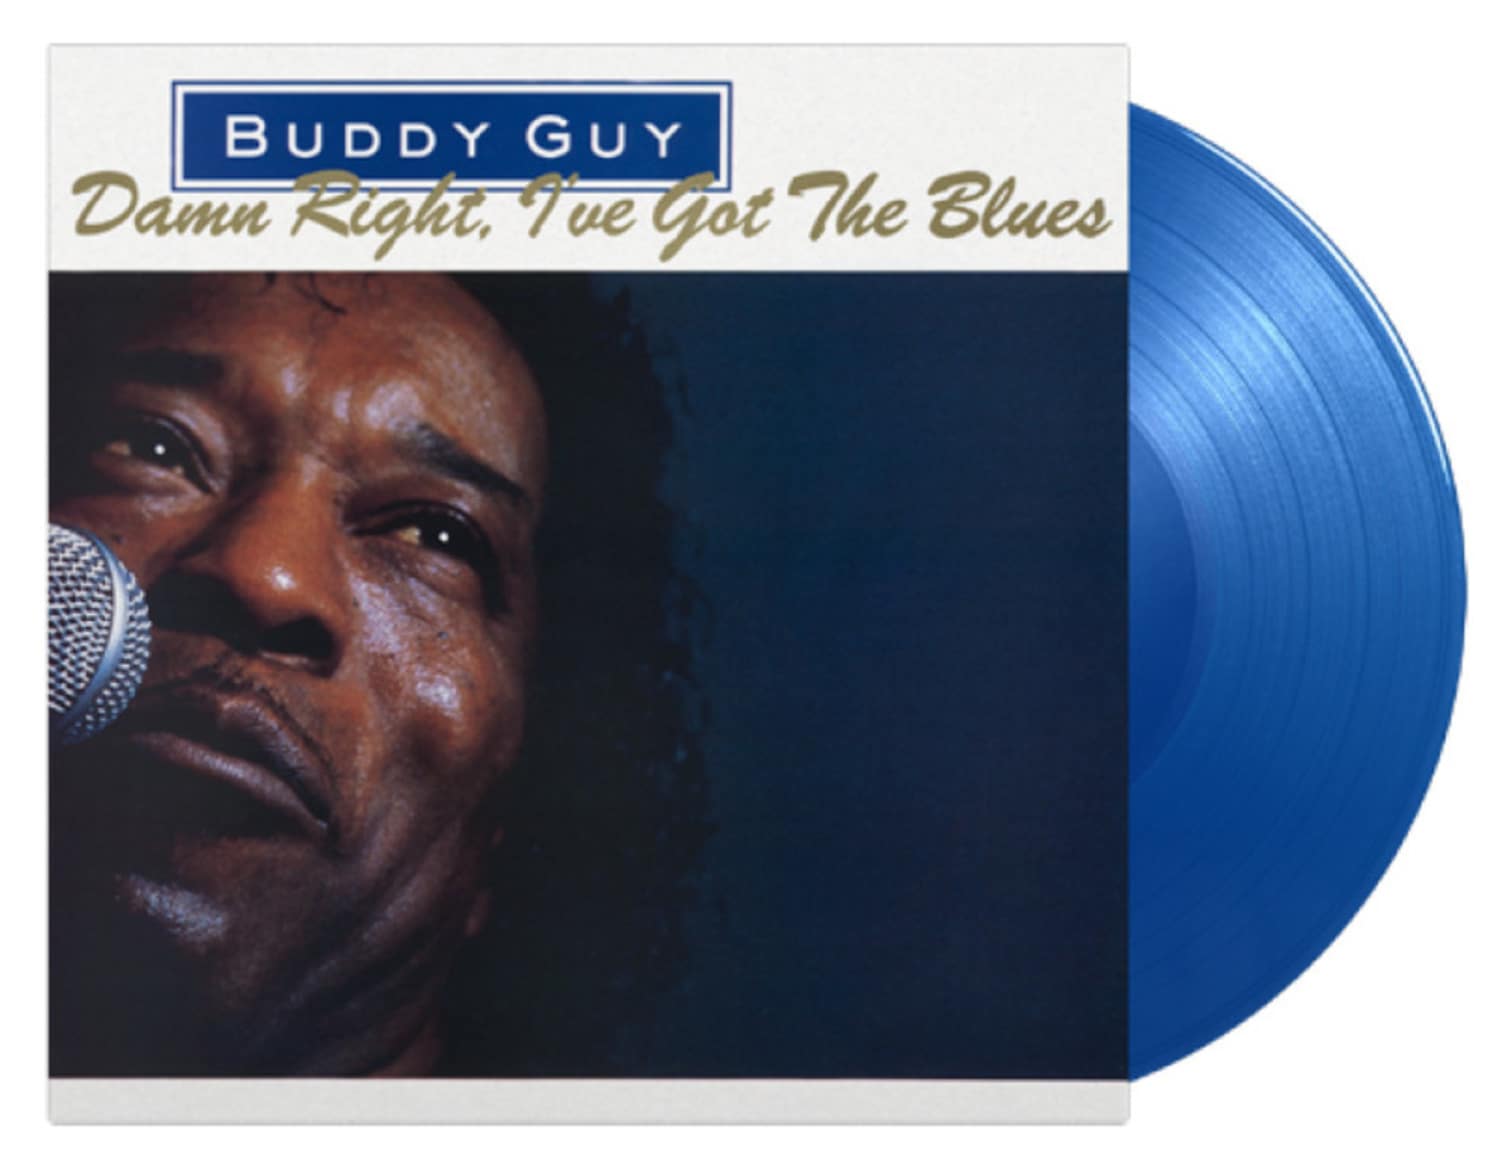 Buddy Guy - DAMN RIGHT, I VE GOT THE BLUES 